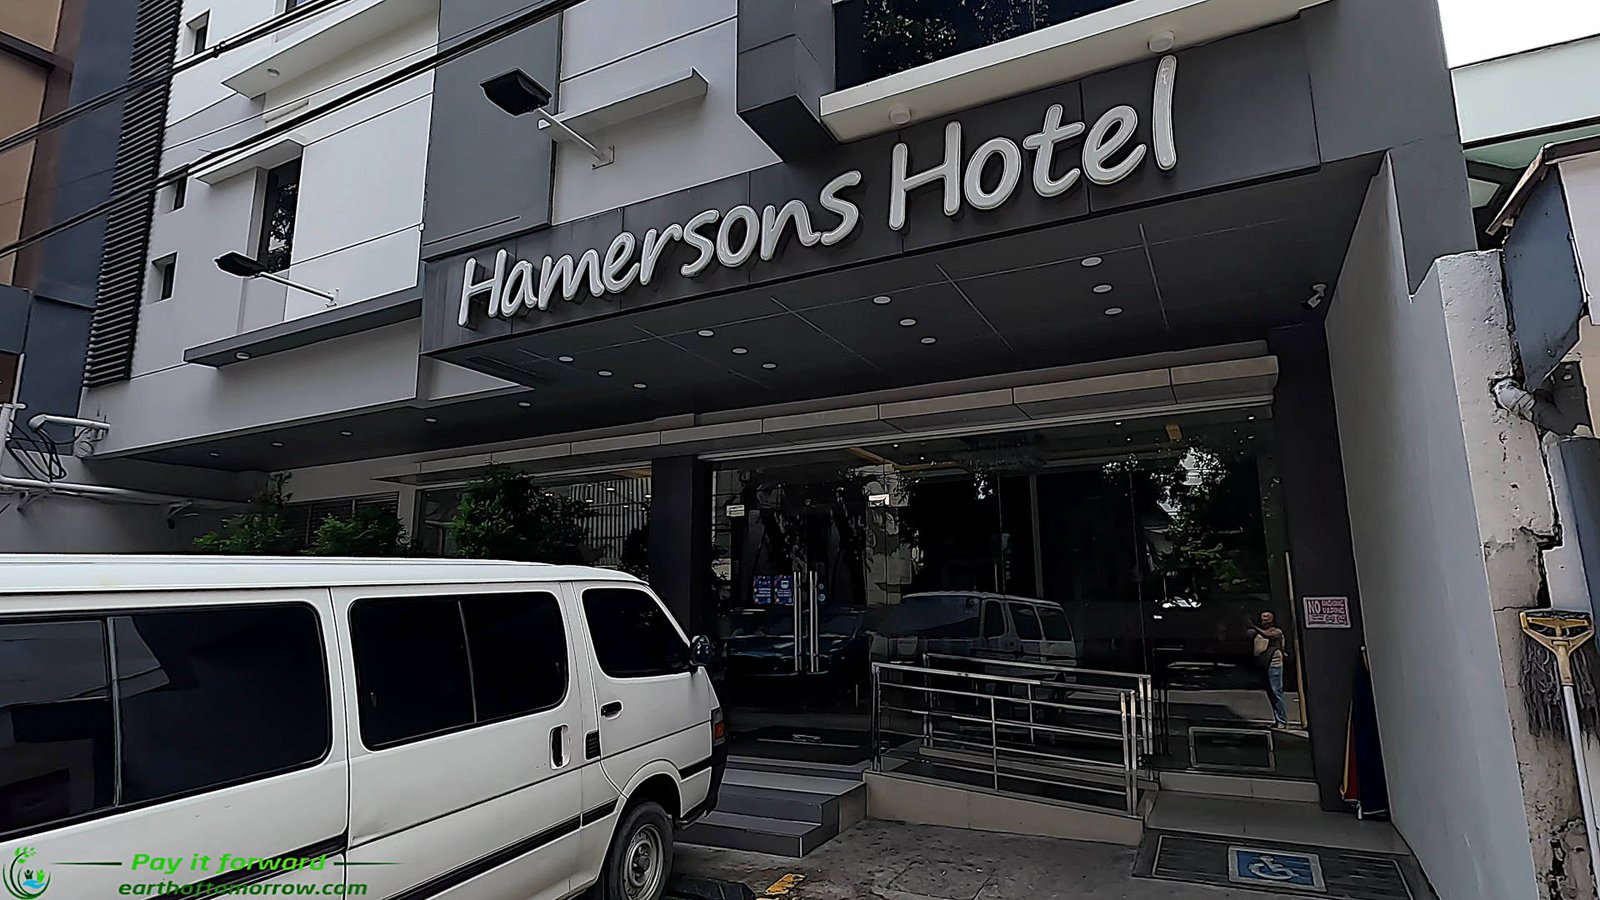 We review Hamersons Hotel in Cebu City